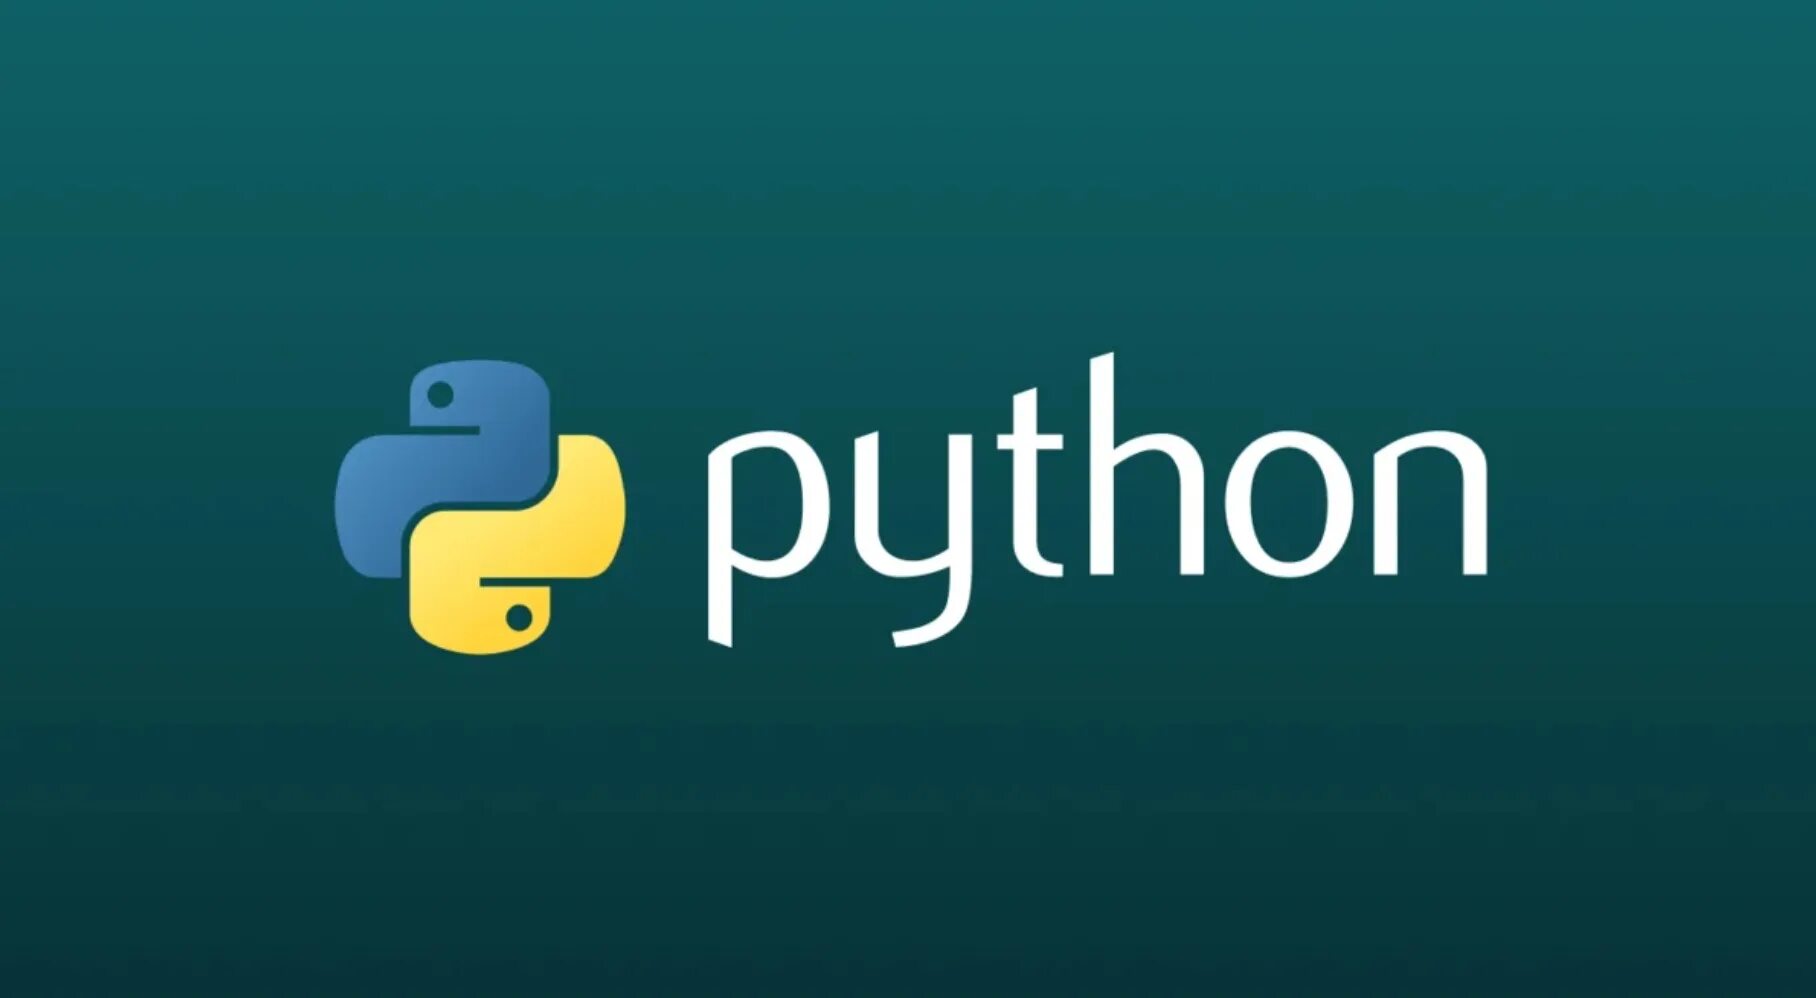 Логотип программирования питон. Пайтон язык программирования. Язык программирования Python. Питон программирование. Пион язык программирования.